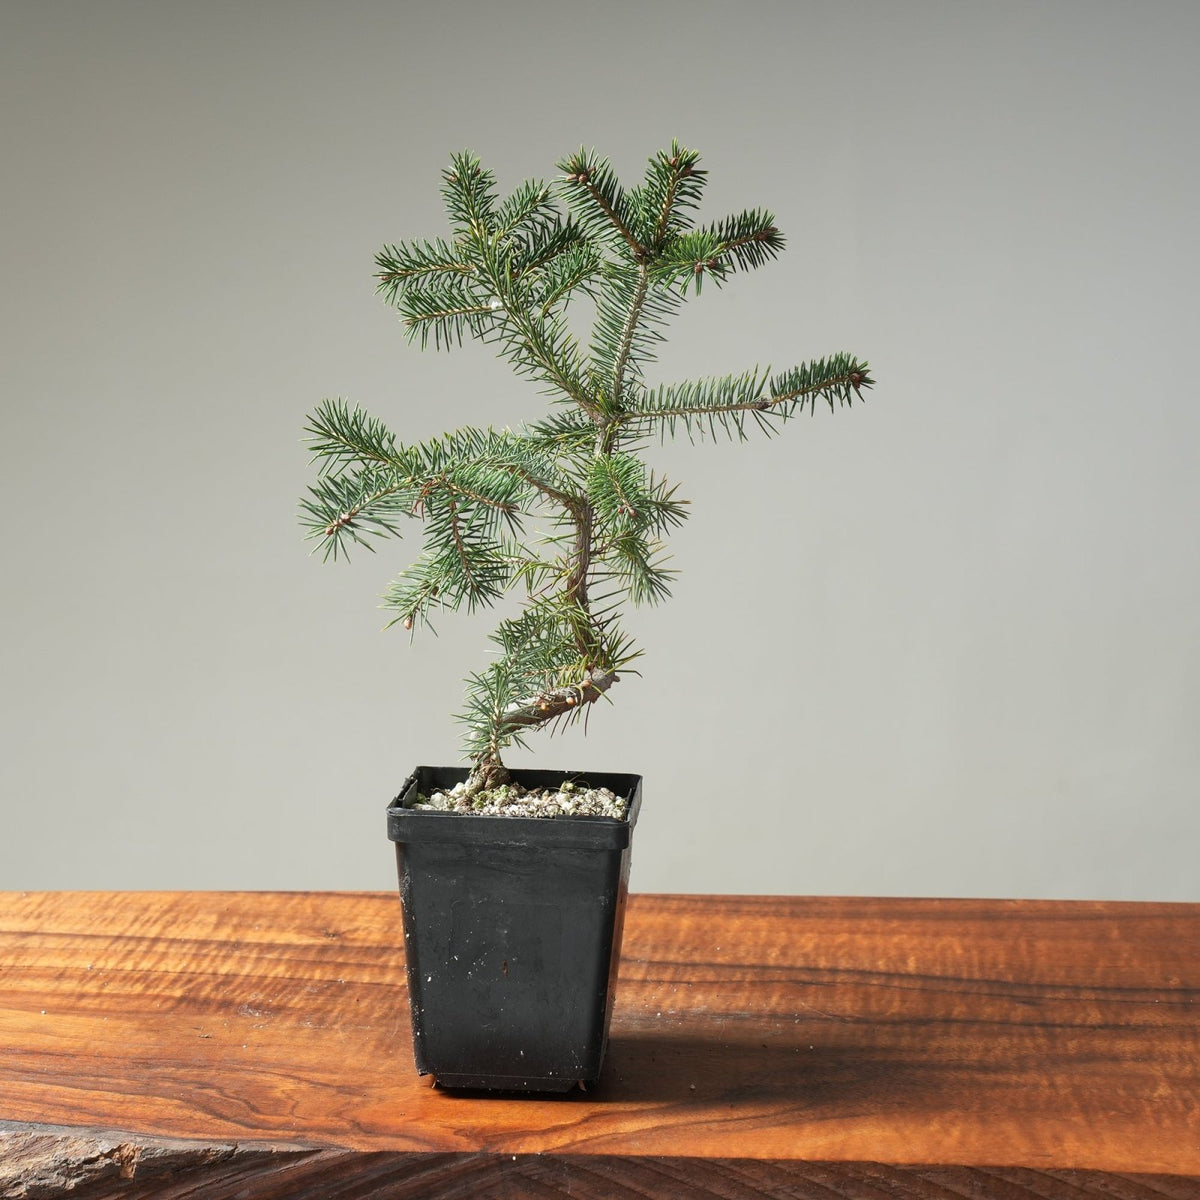 Norway Spruce Bonsai Tree Care Essentials